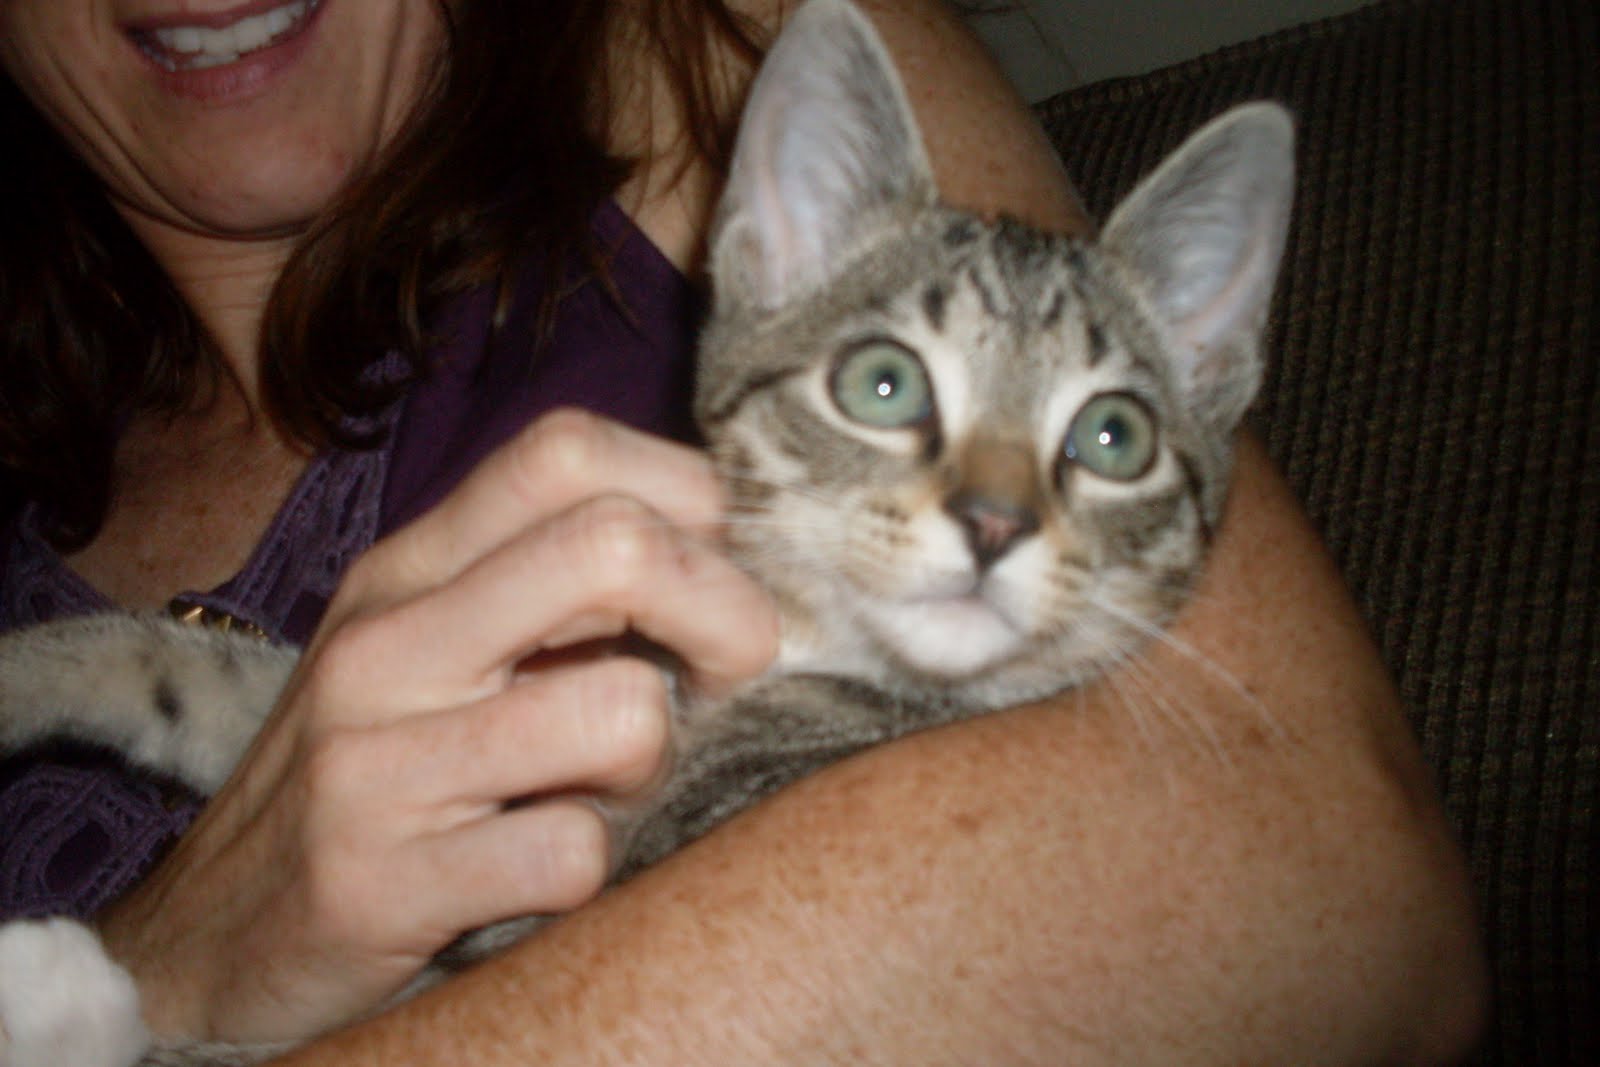 Name that Kitten! | Author Christina Tarabochia
